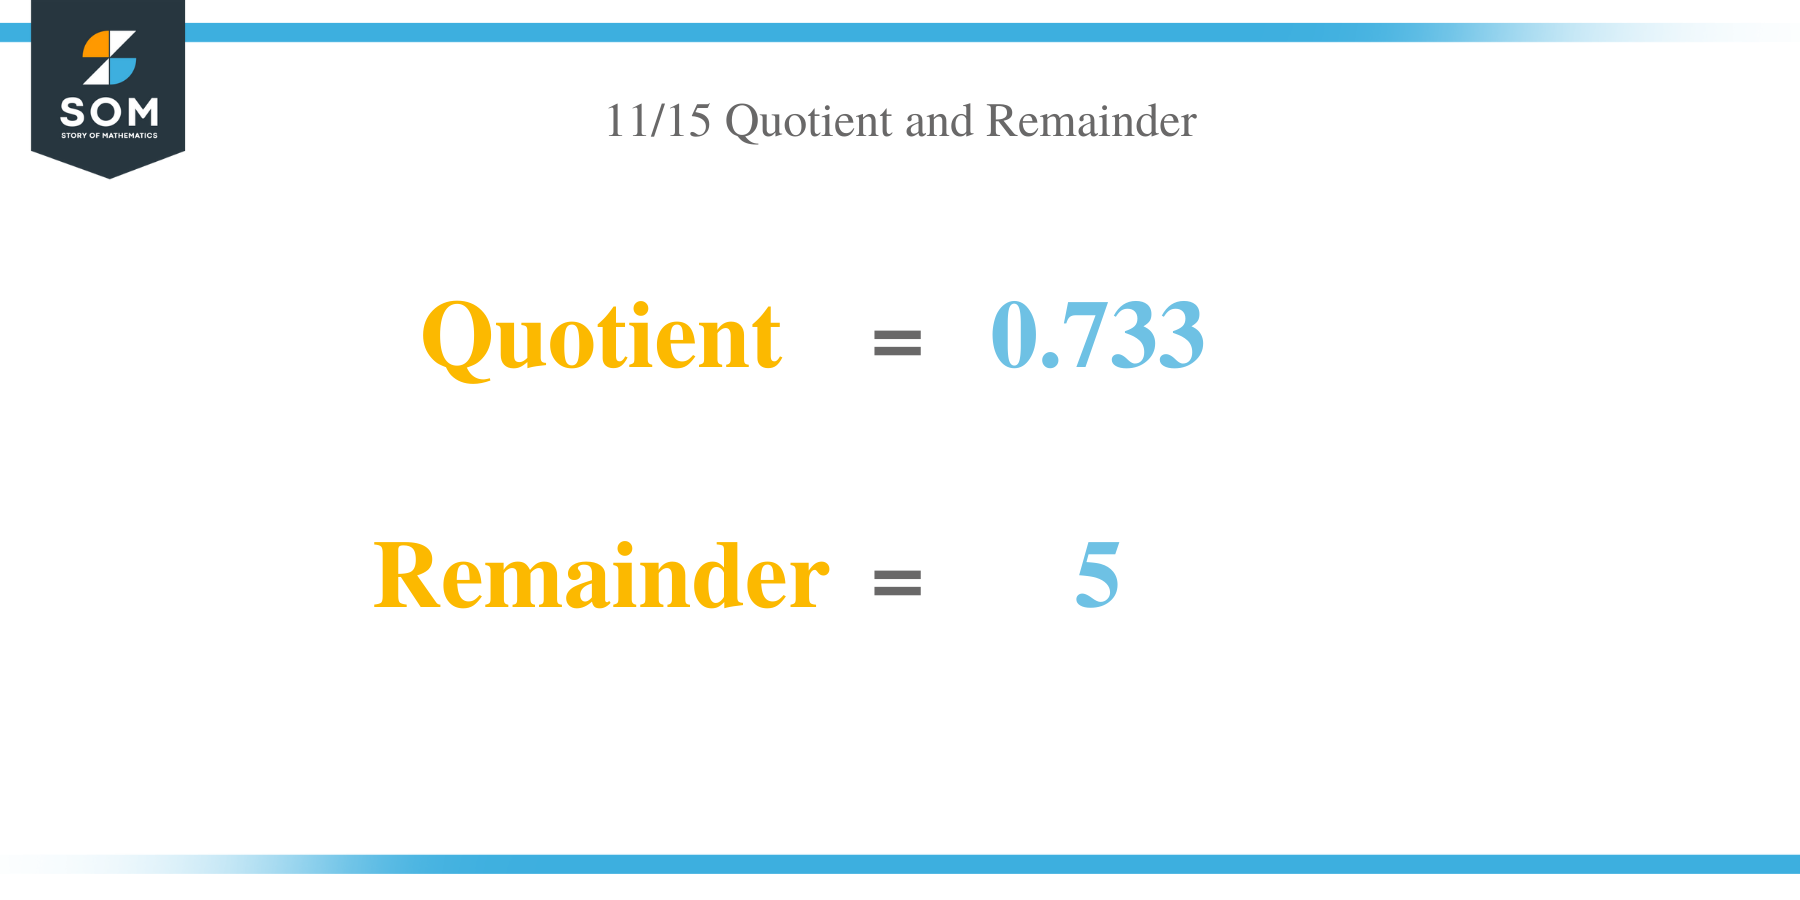 Quotient and Remainder of 10 per 15